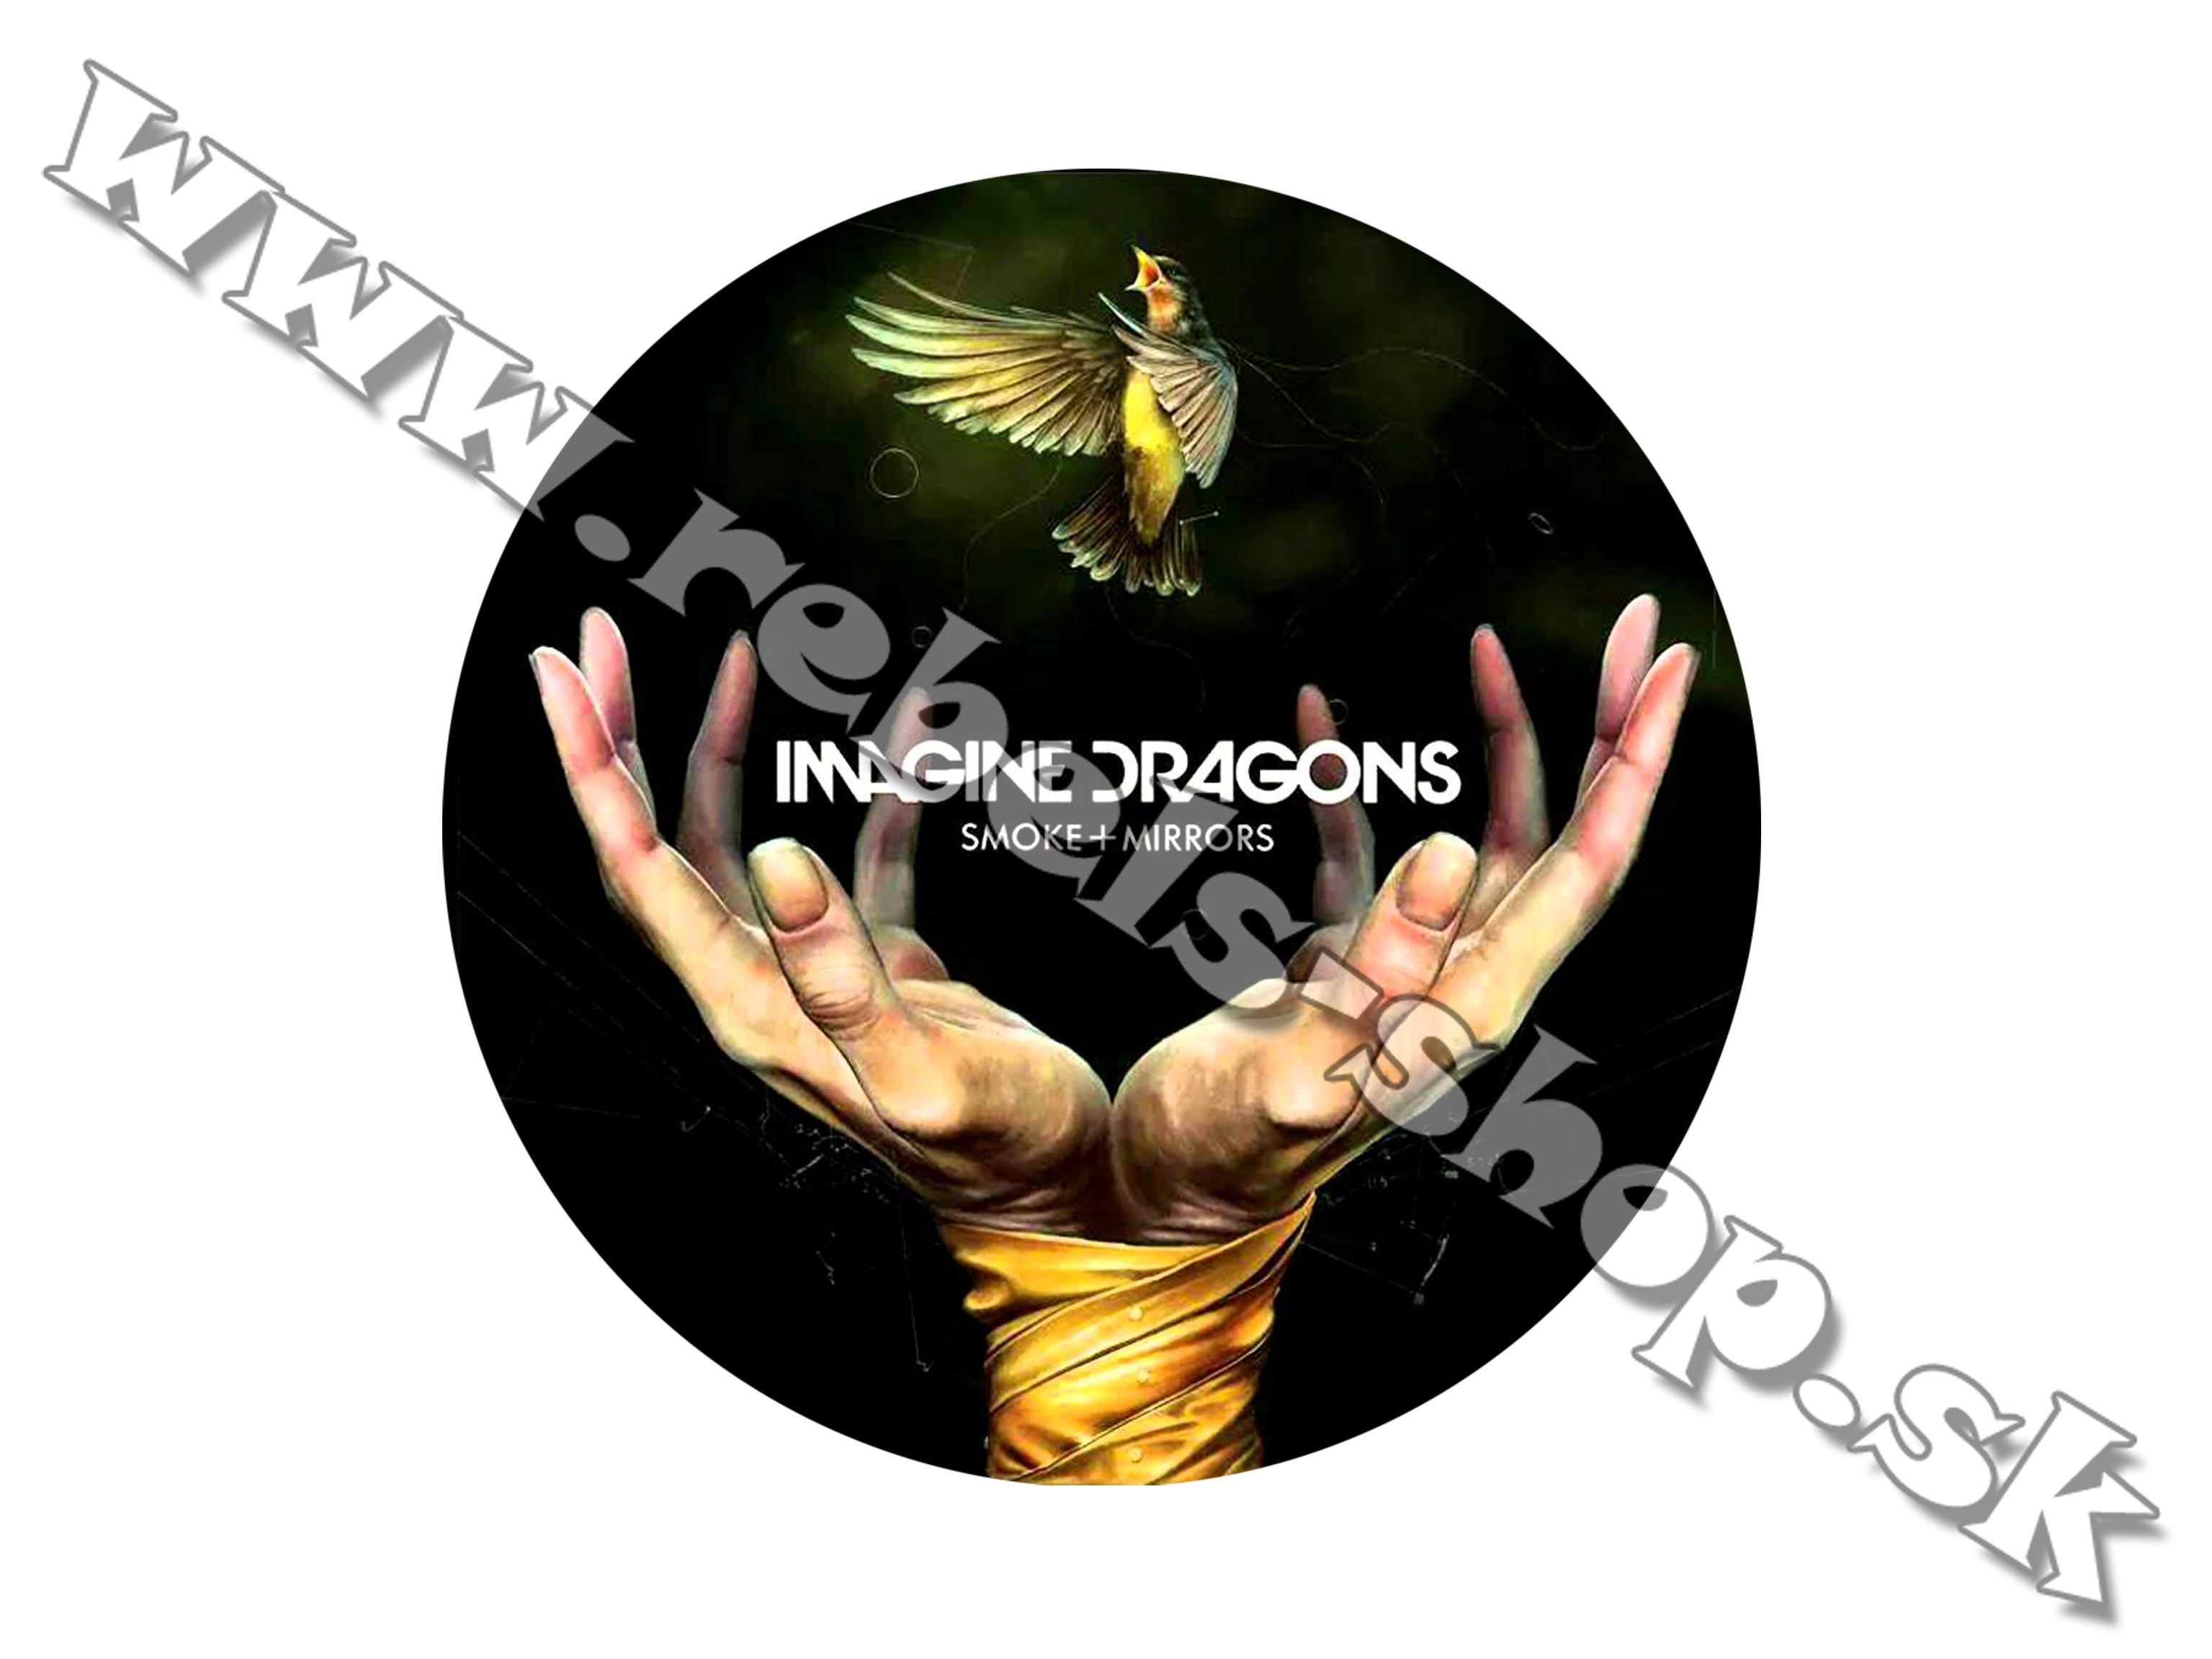 Odznak "Imagine Dragons"